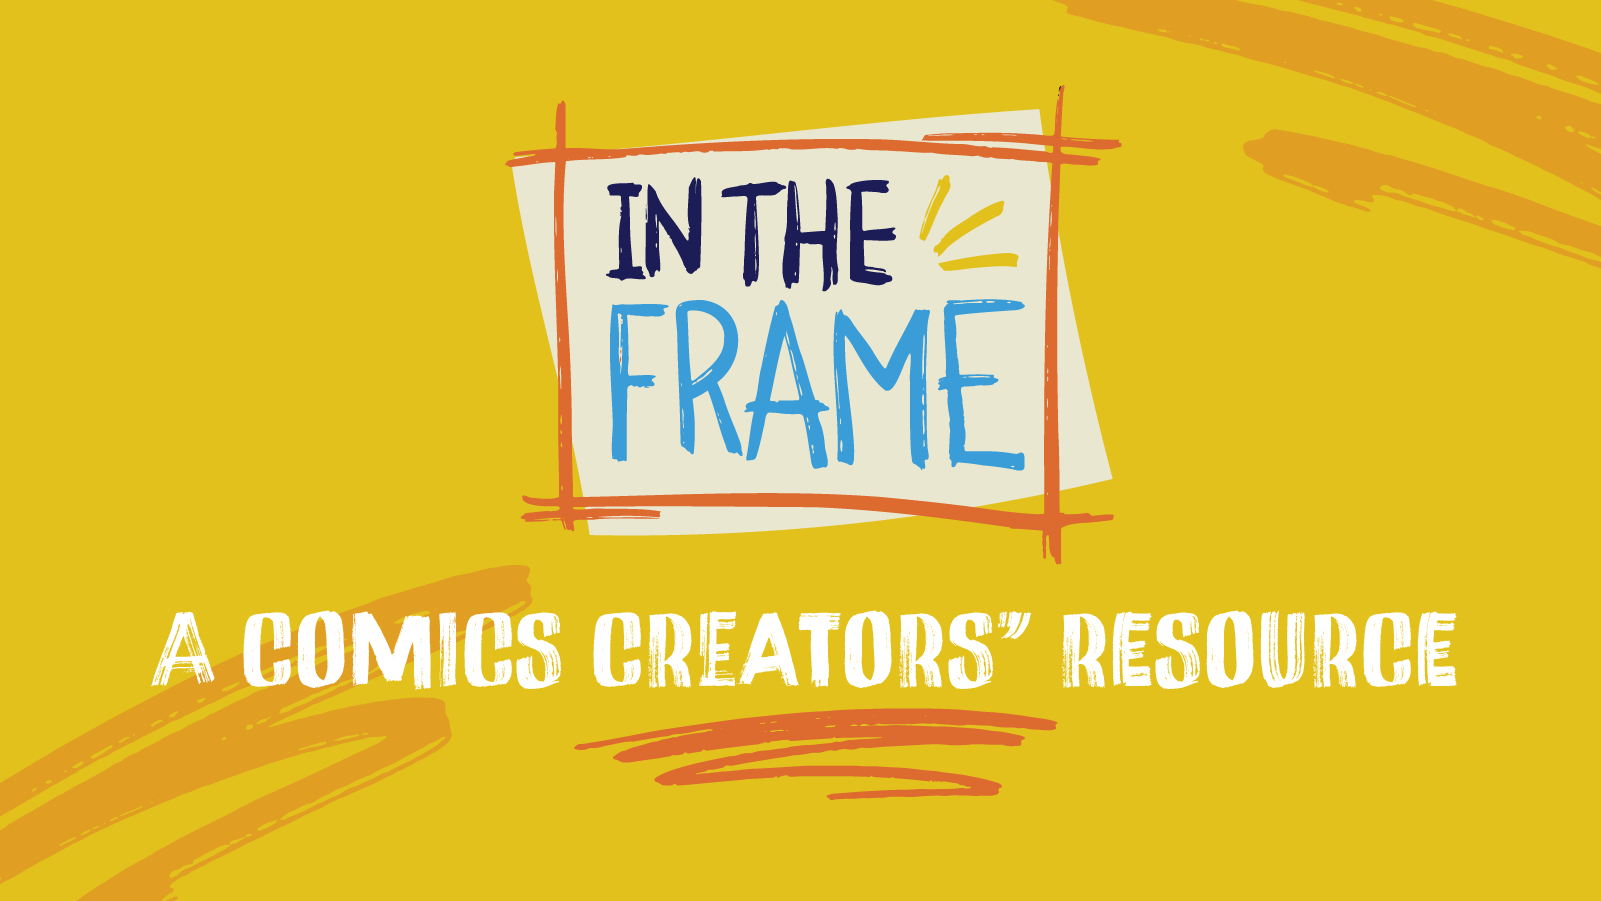 In the Frame comics creators resource